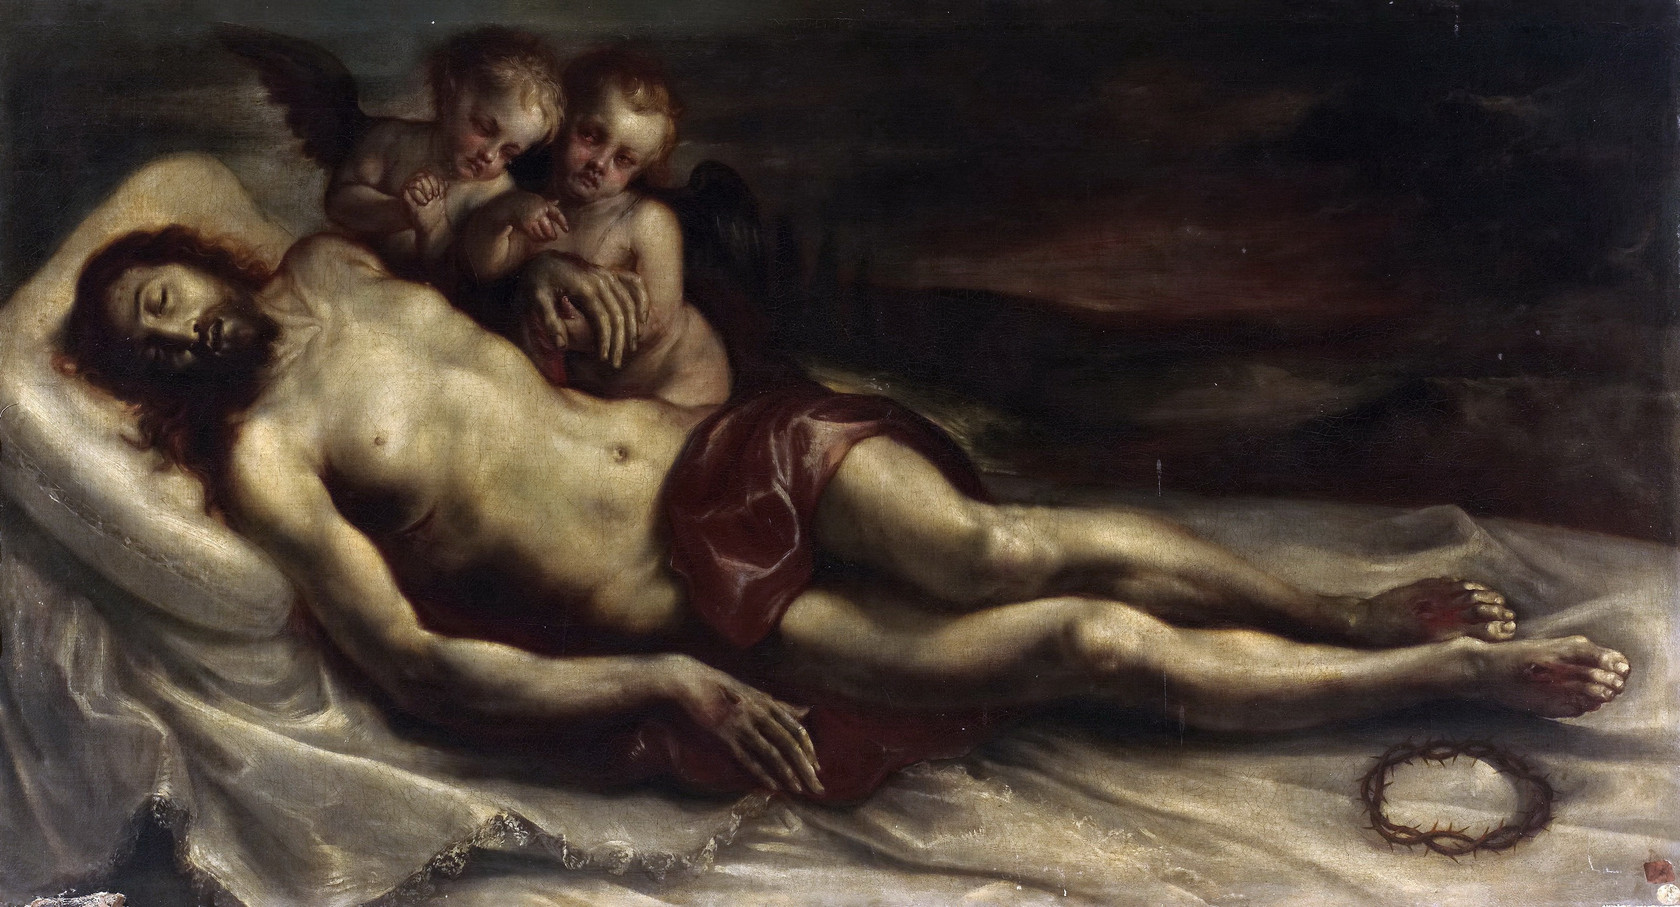 Картина Лежащий Христос - Музей Прадо